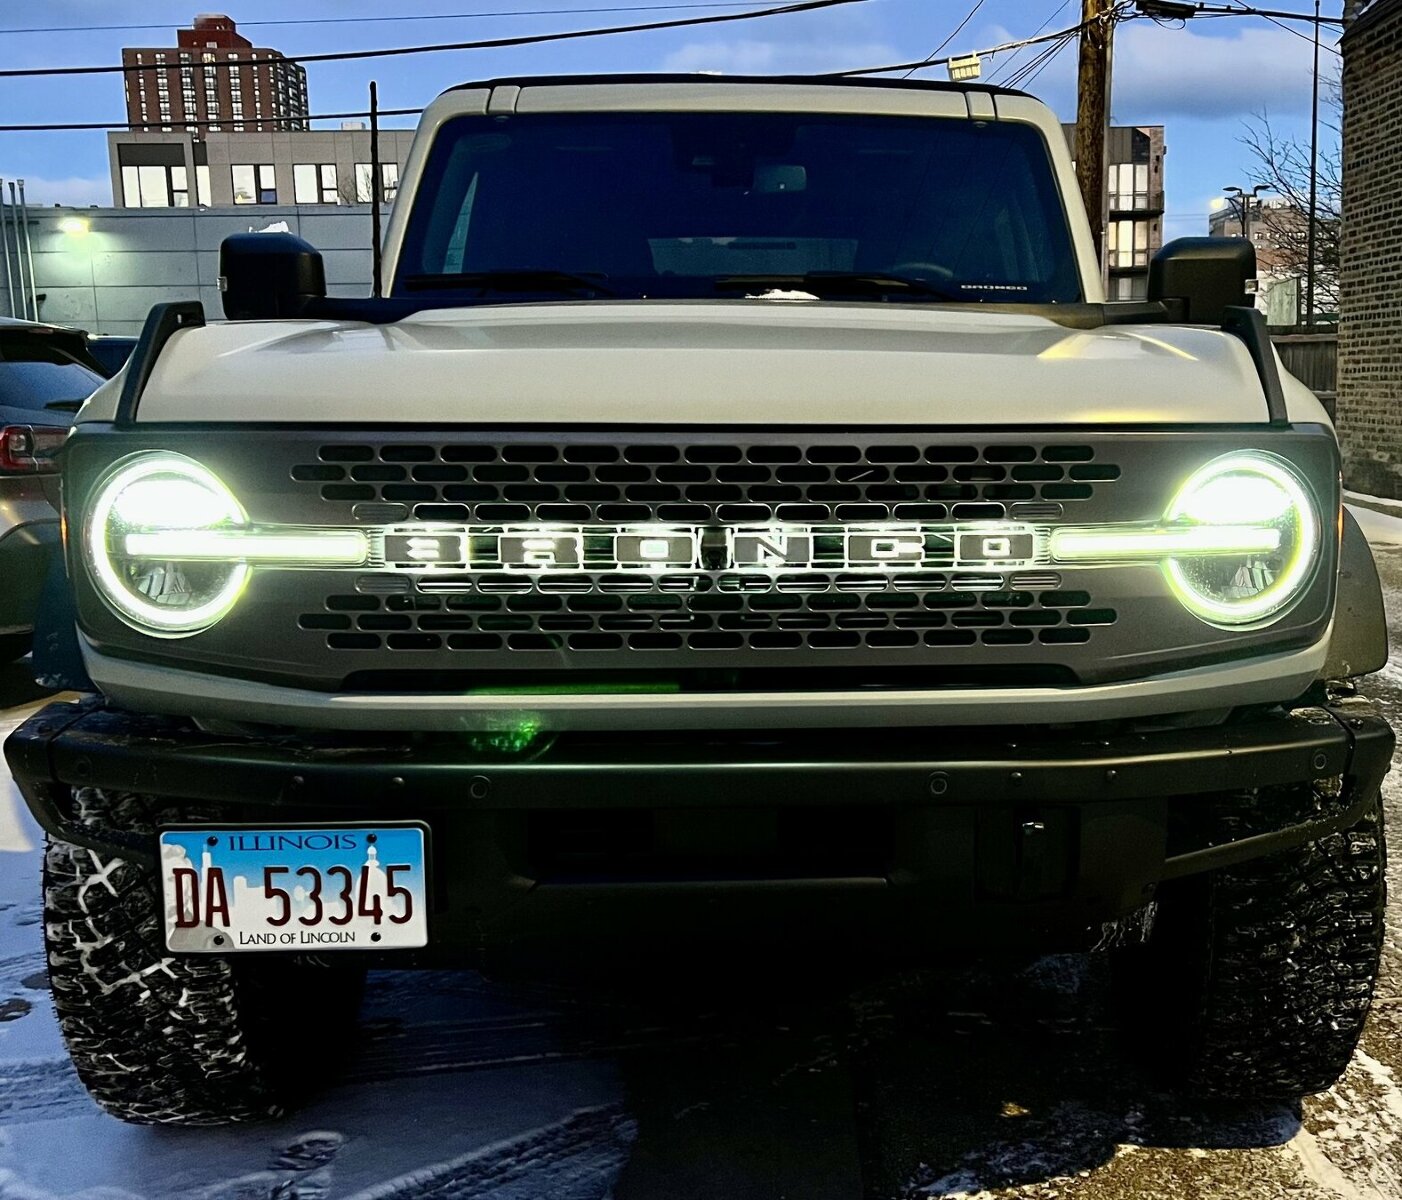 ORACLE Lighting 3140-M-001 Fits 2021-2023 Ford Bronco Universal Illuminated LED Letter Badges - Matte White Surface Finish - M